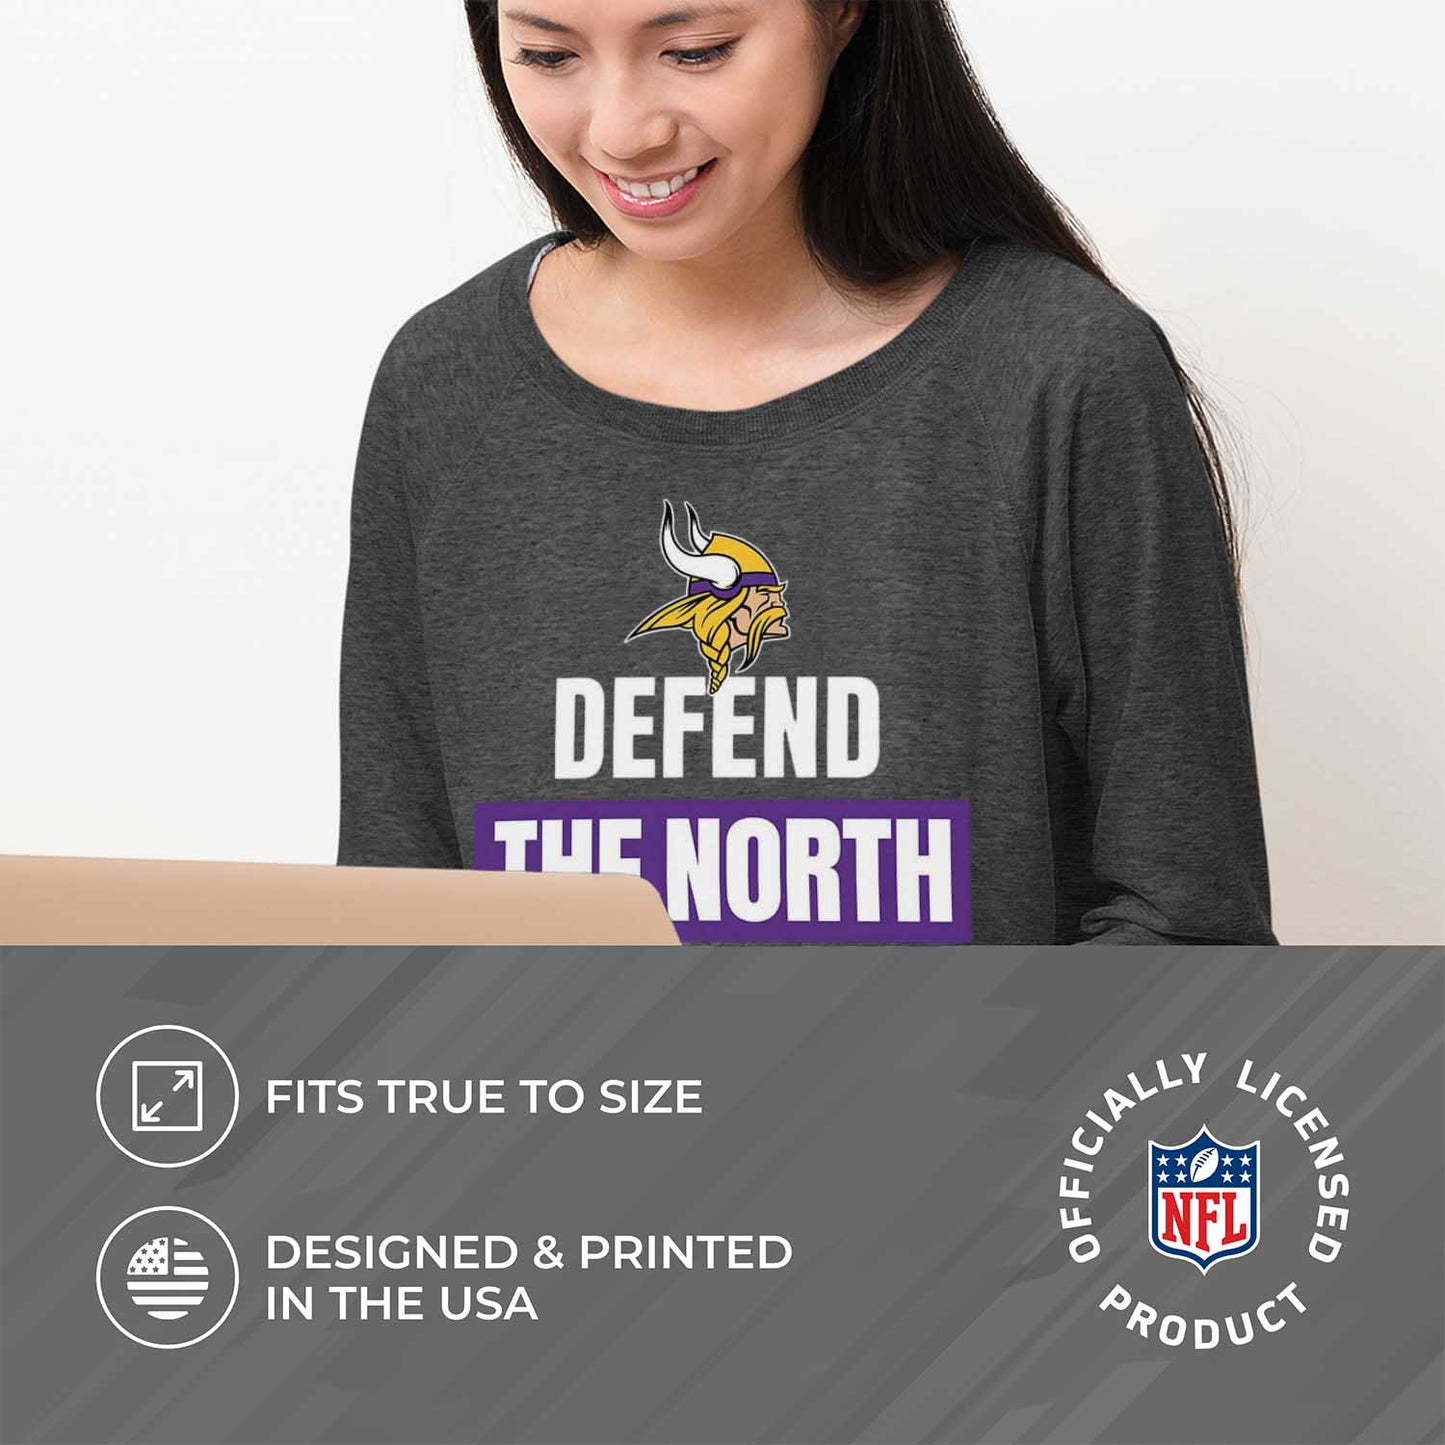 Minnesota Vikings NFL Womens Plus Size Team Slogan Crew Neck - Charcoal